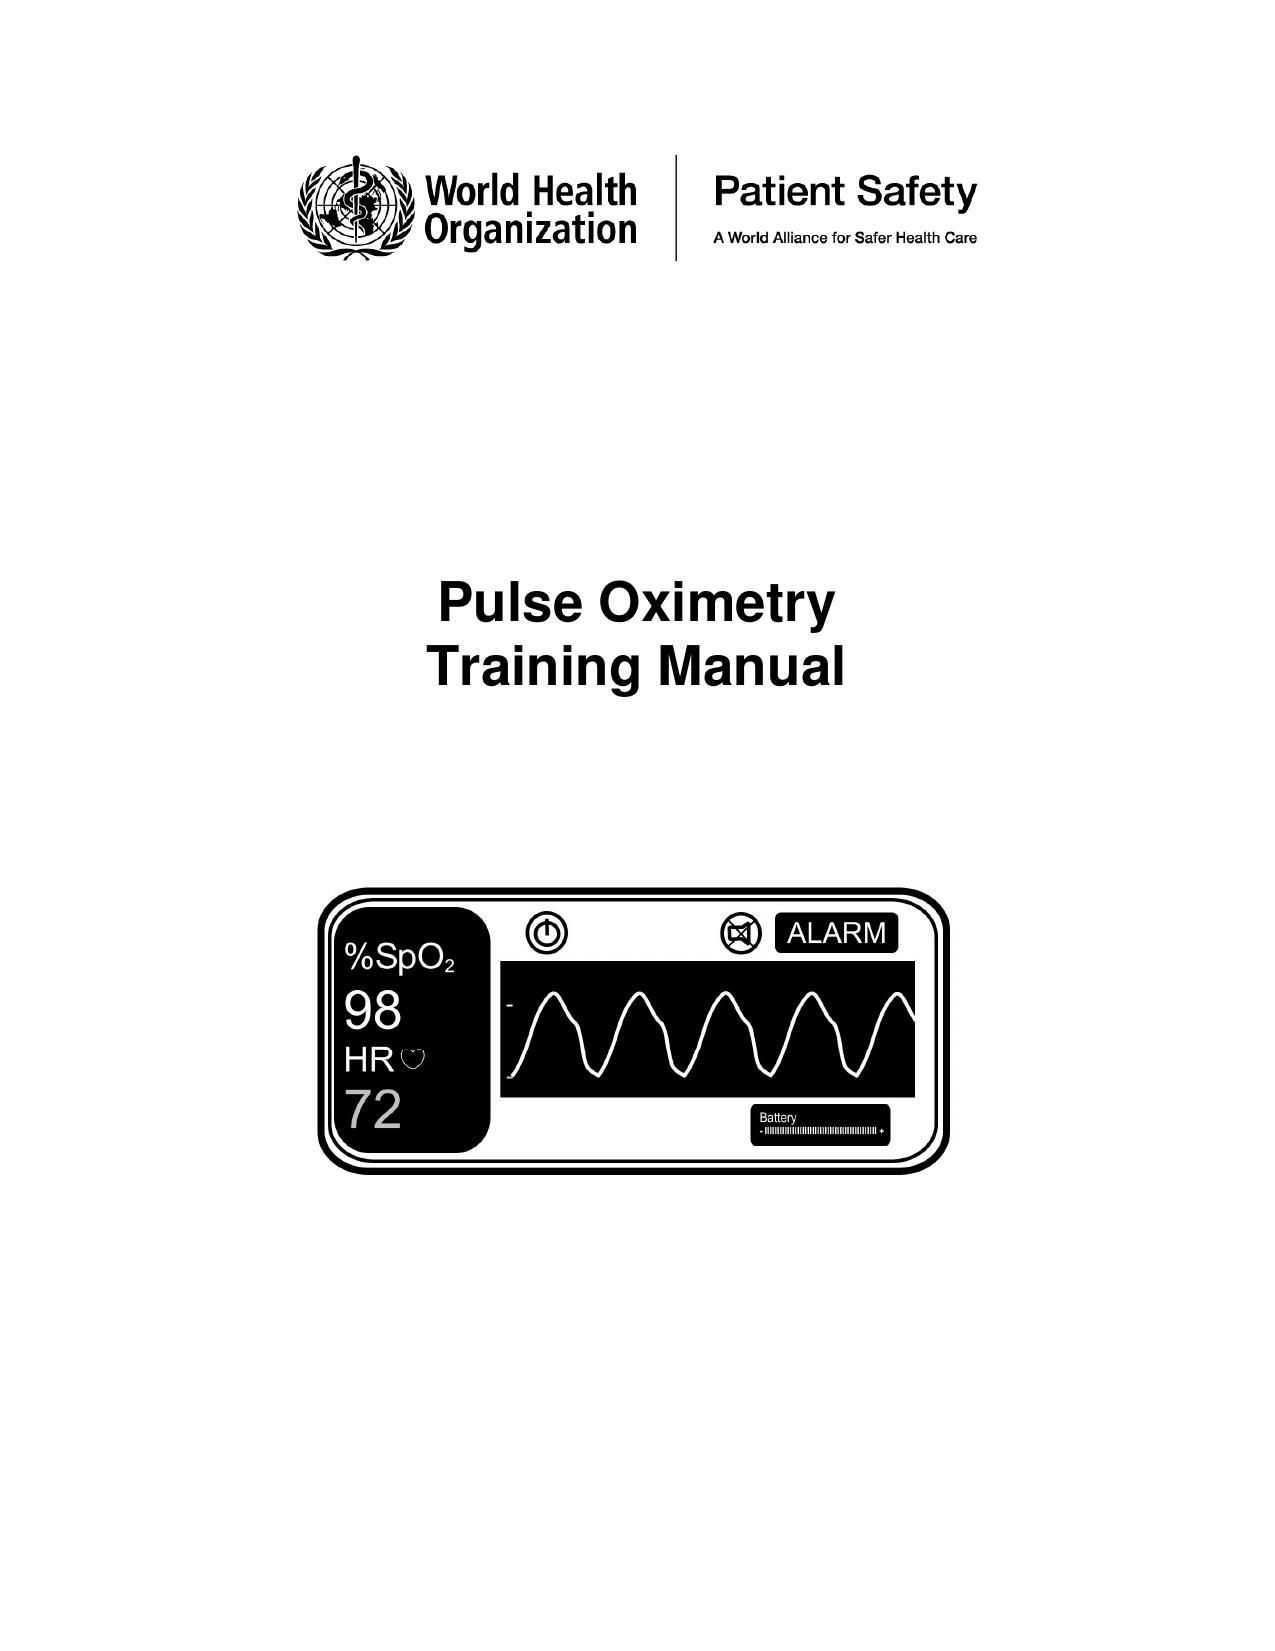 who-pulse-oximetry-training-manual.pdf